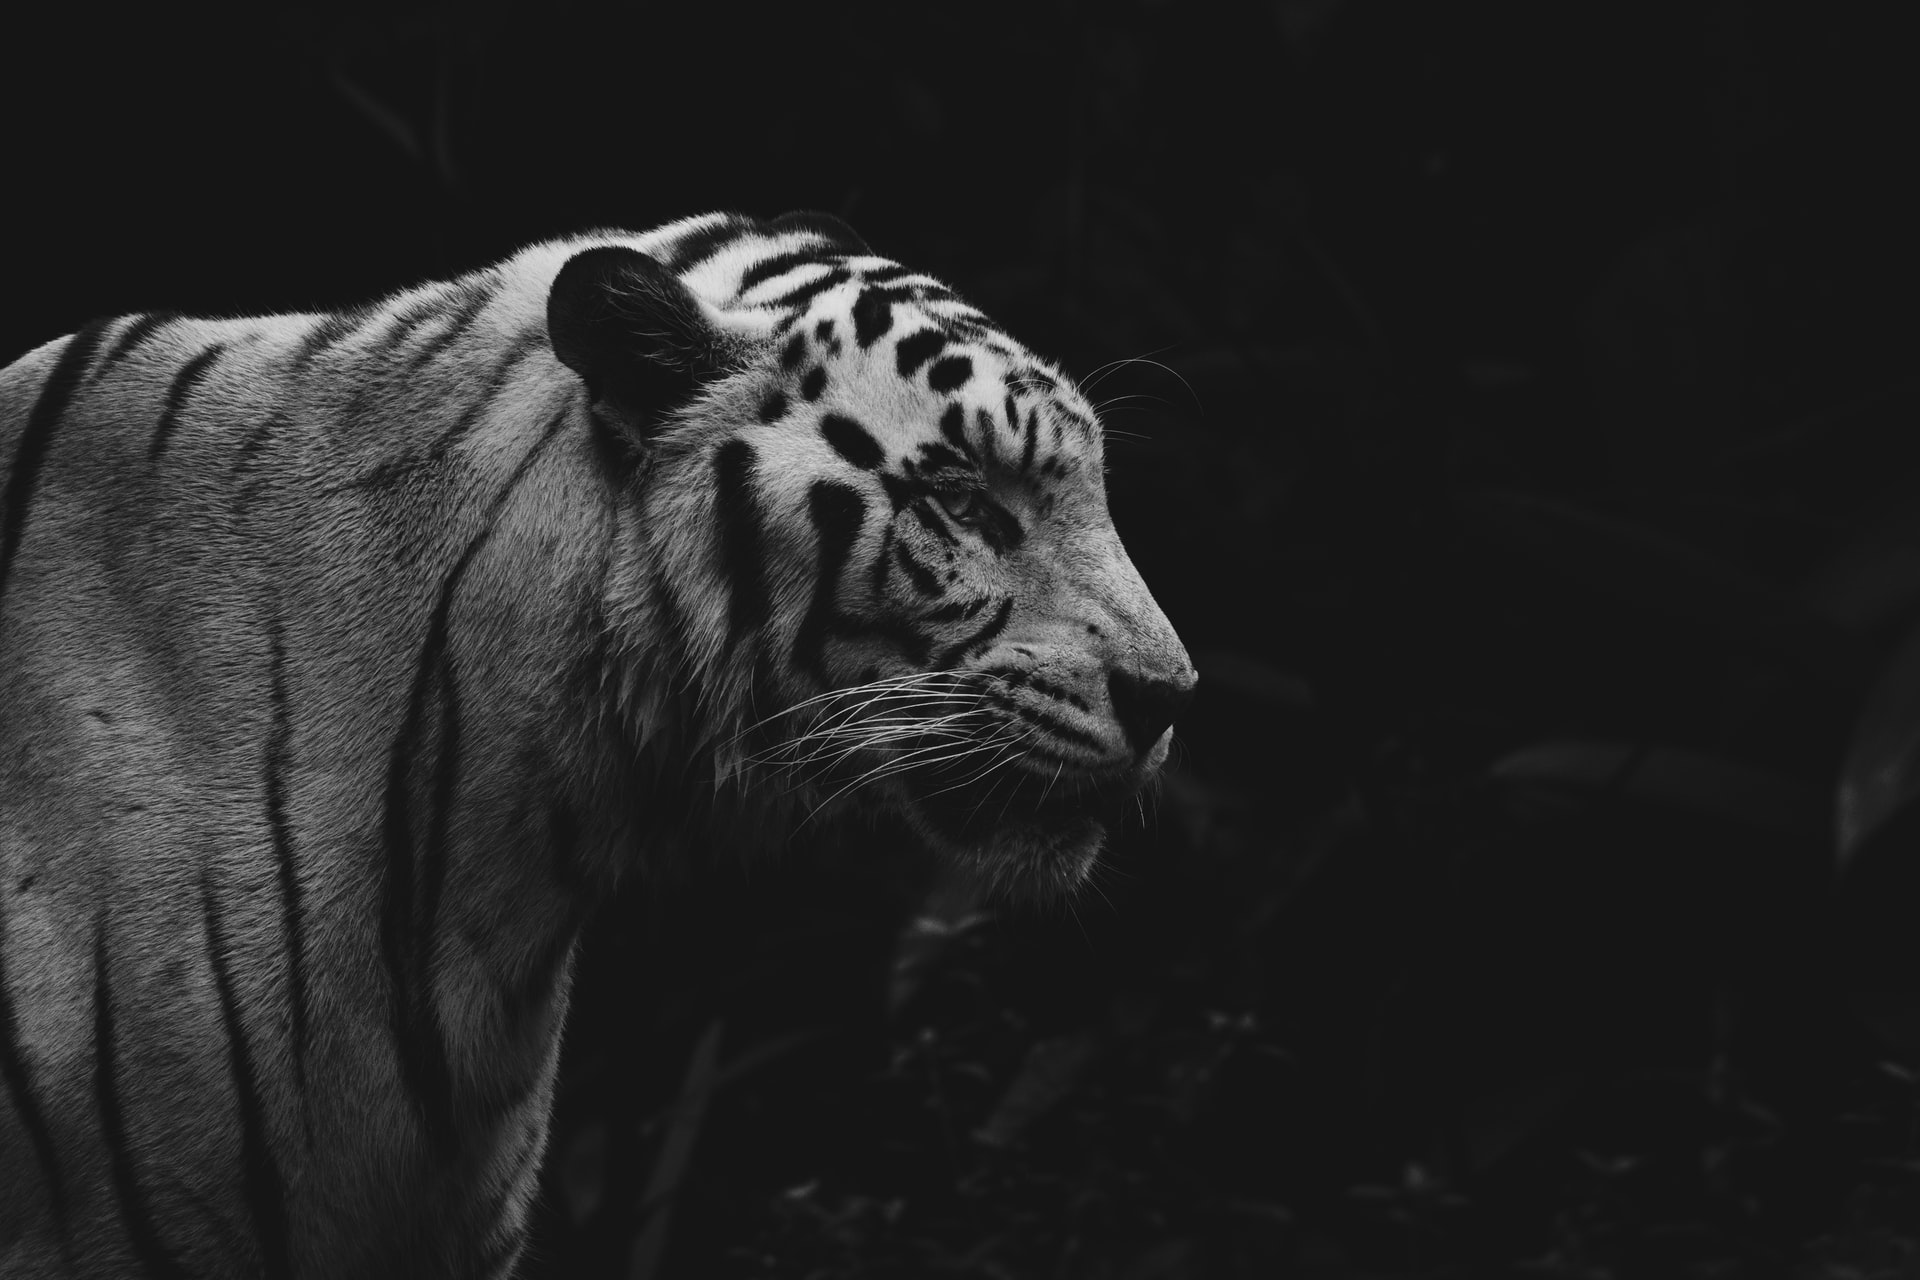 13 Arti Mimpi Dikejar Harimau dalam Berbagai Pandangan, Ada Pesan Baik